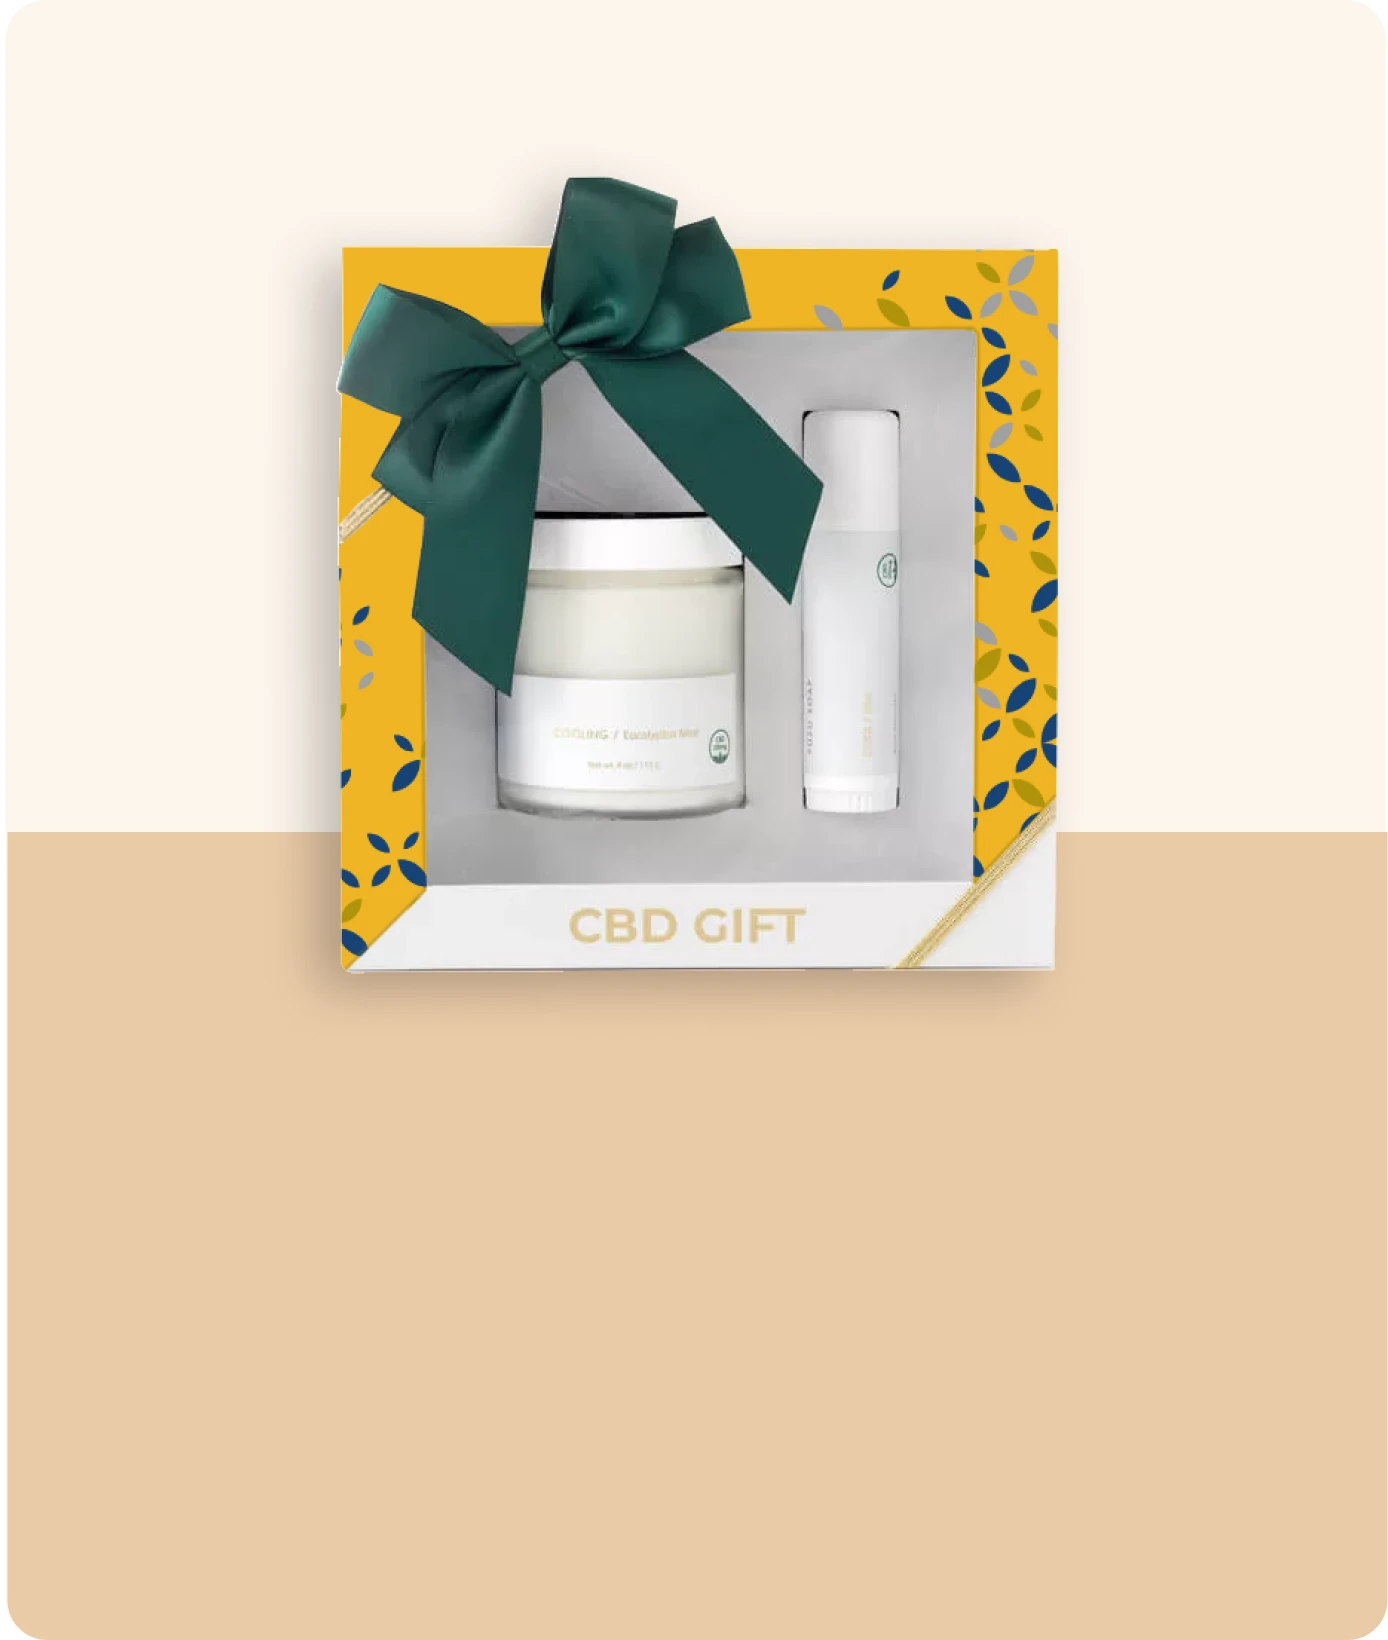 Hemp Gift Boxes related product image | The Box Lane